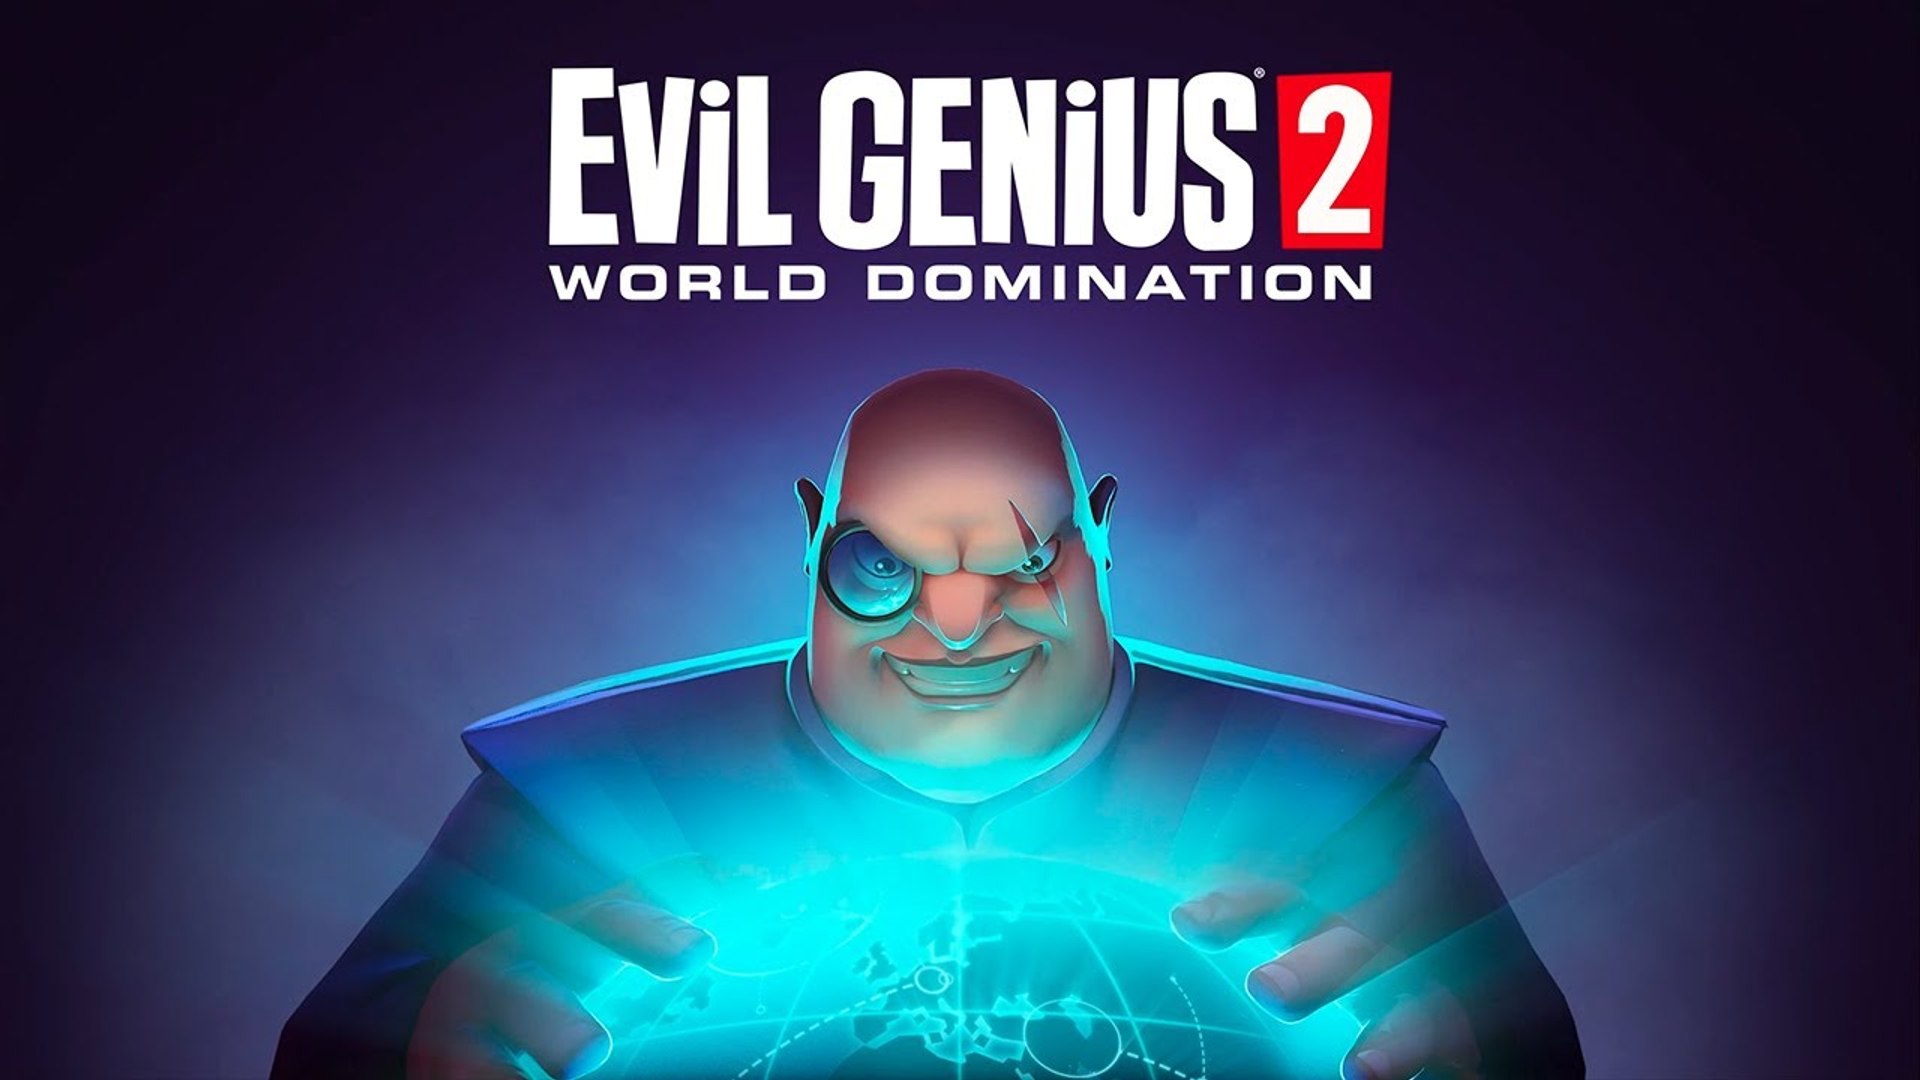 Evil Genius 2: World Domination เตรียมลงคอนโซล 30 พ.ย. นี้